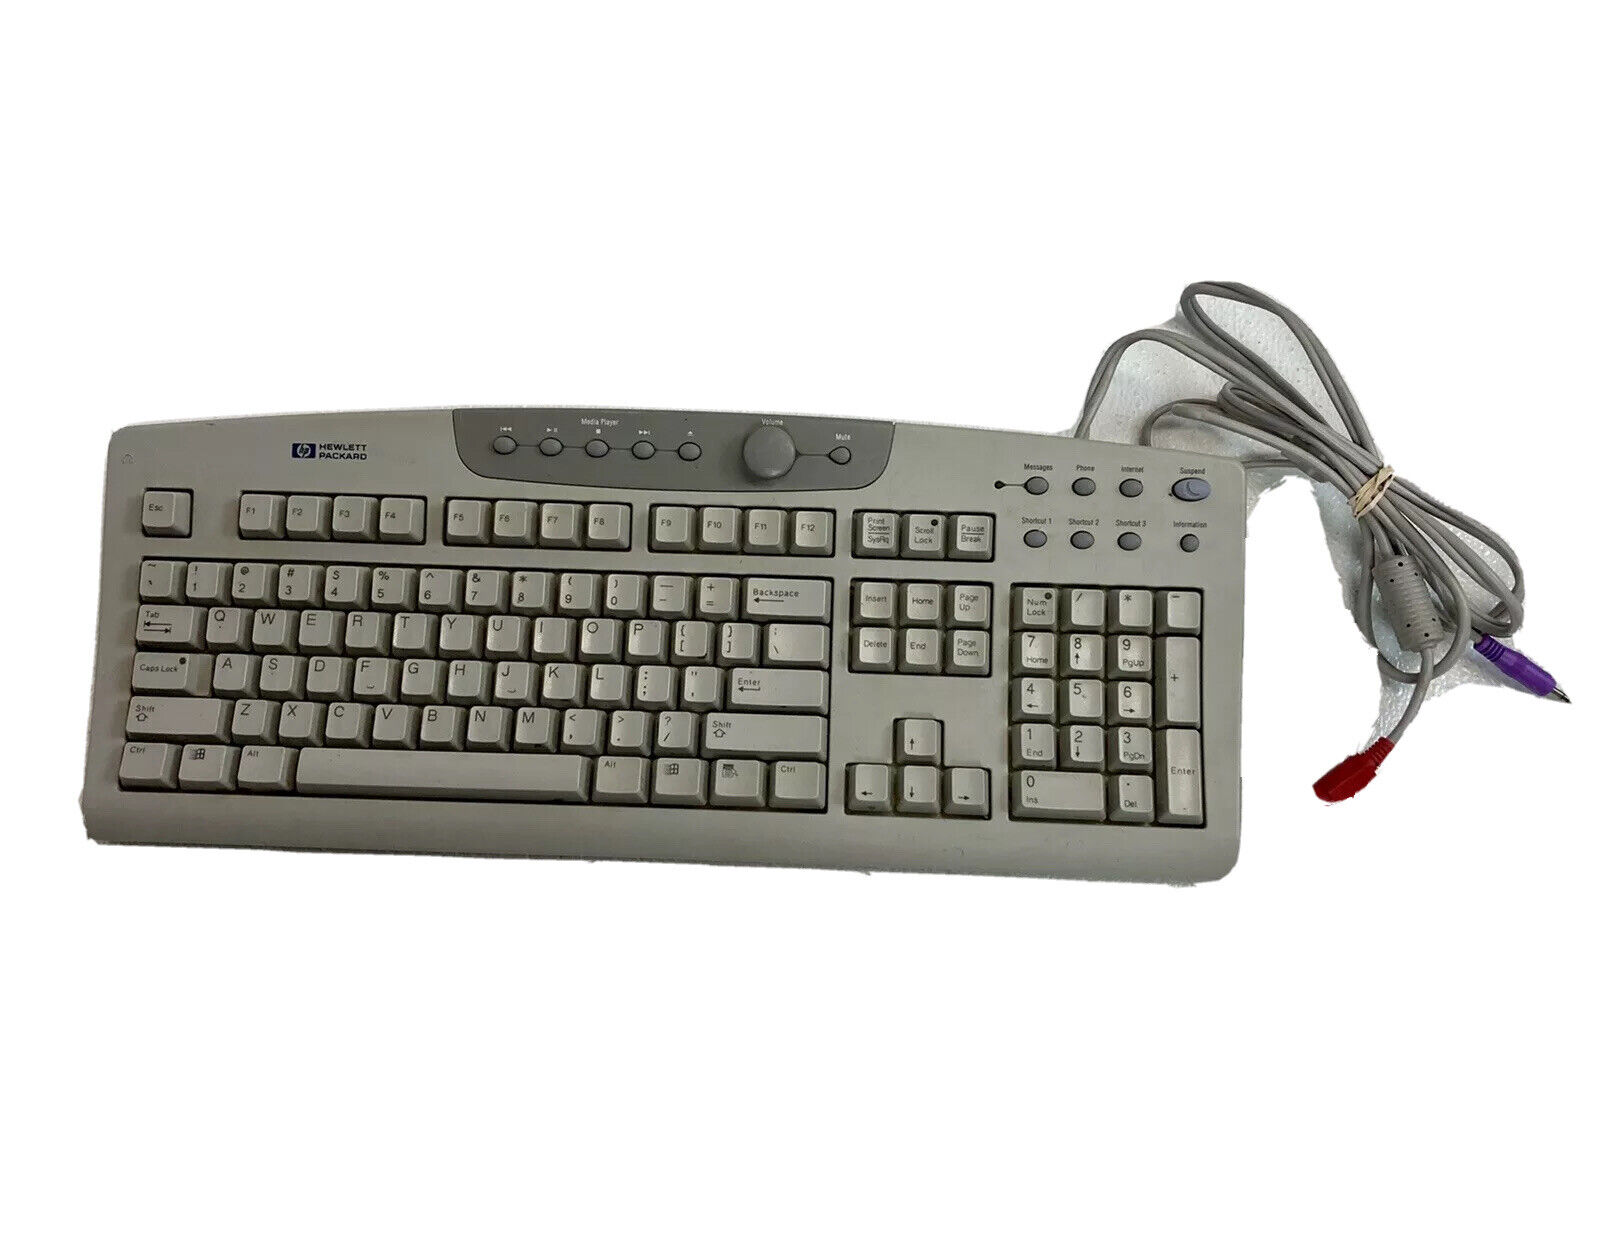 Hewlett Packard SK-2505 Mechanical Clicky Wired Keyboard